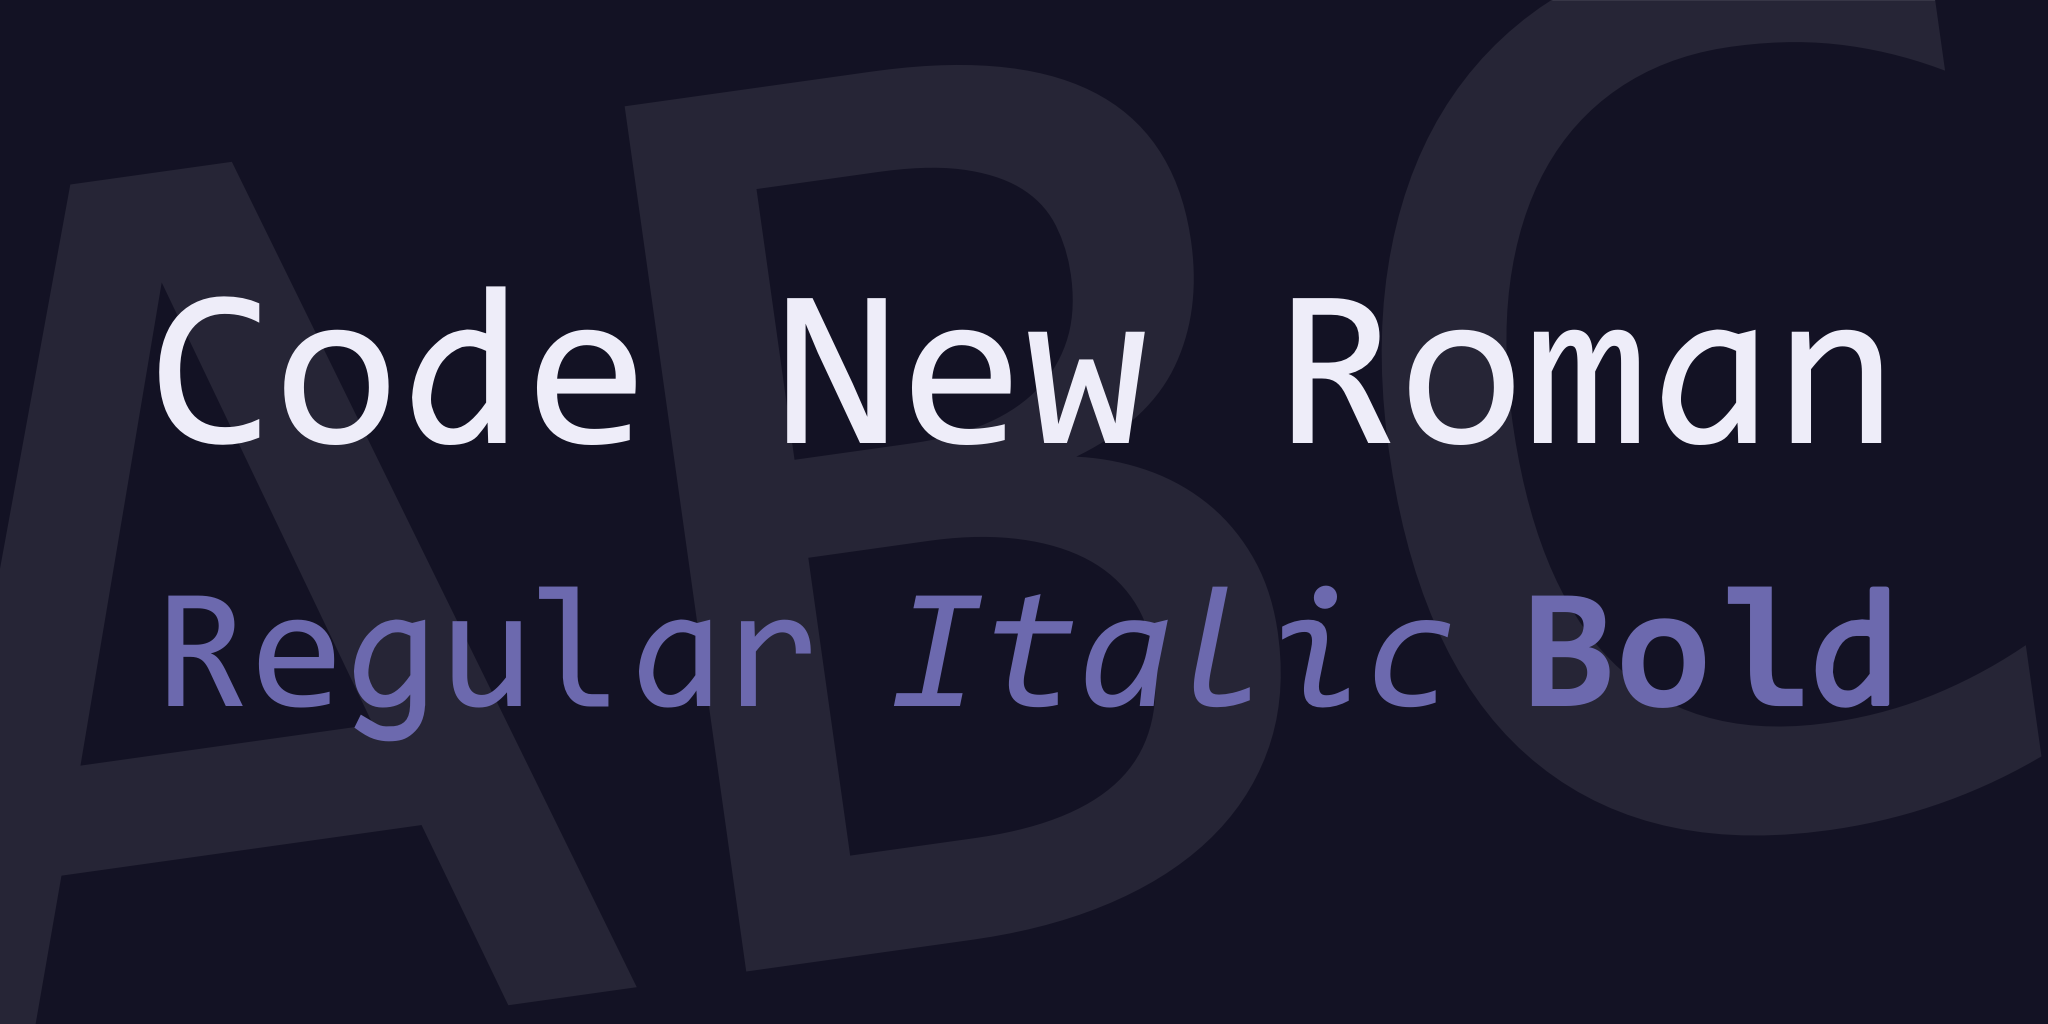 Code New Roman